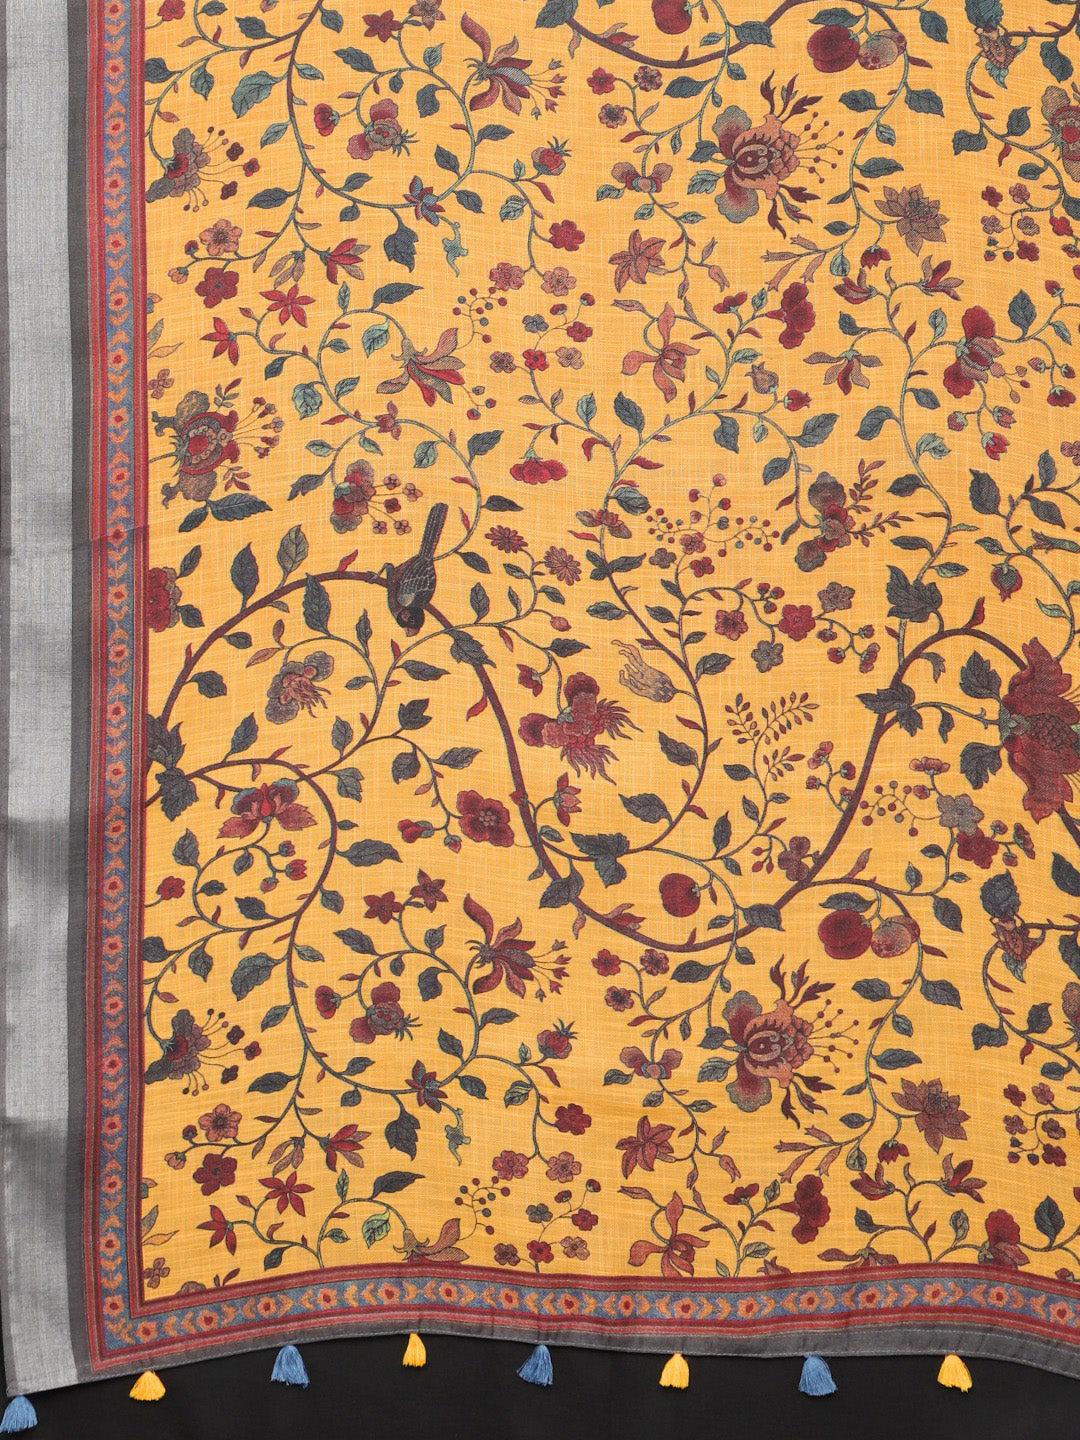 Neeru's Yellow Printed Saree With Blouse